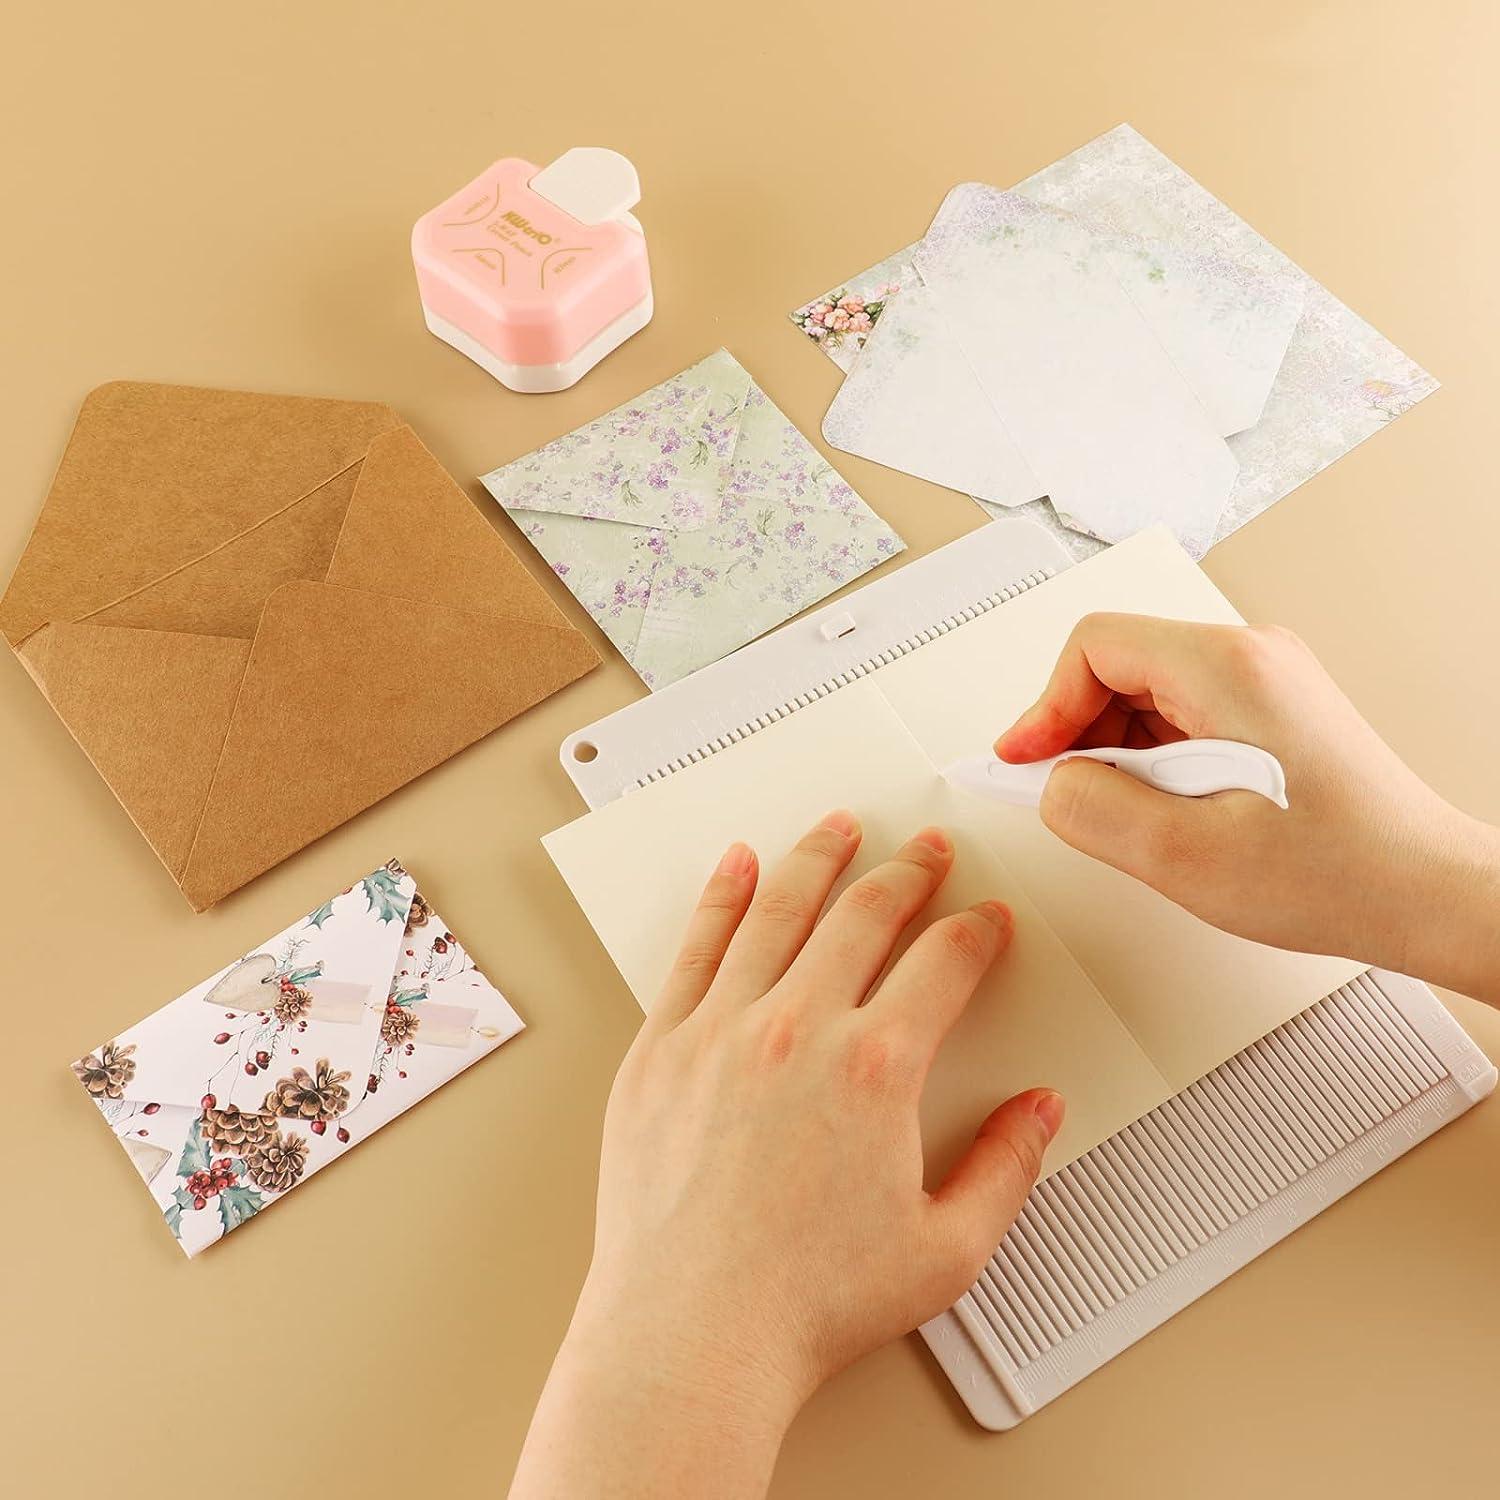 Creative Envelope Maker Board 6.4*8.5 inch Multi-Purpose Scoring